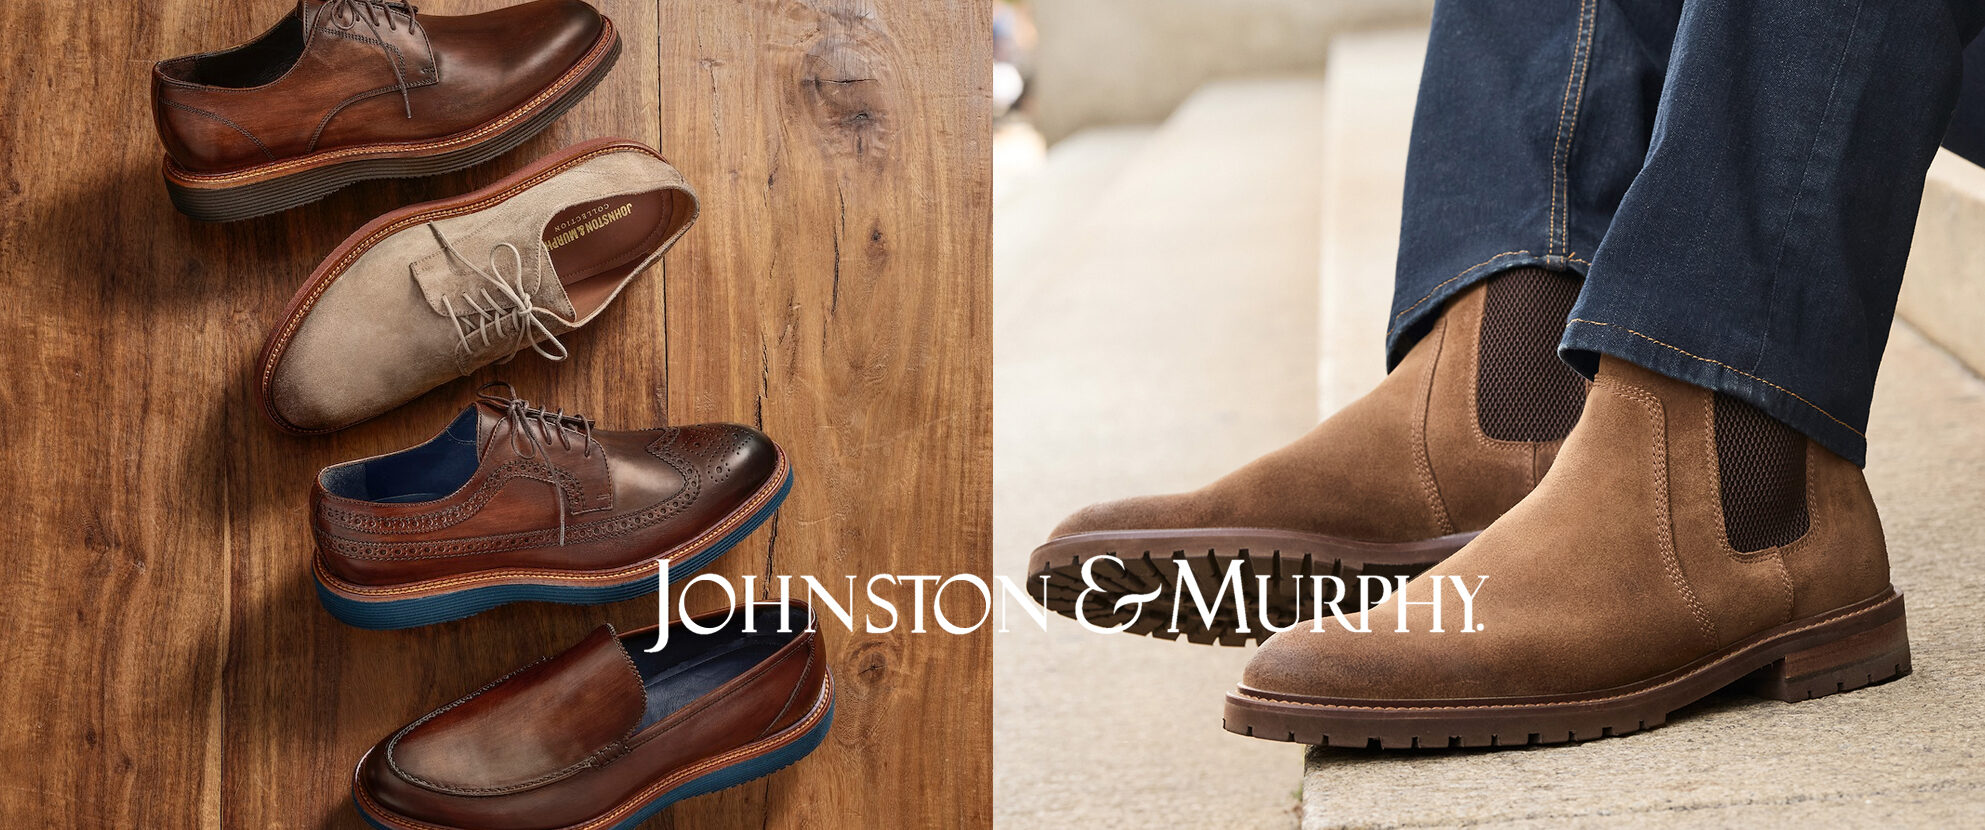 Edwards Men's Wear Featured Brand - Johnston & Murphy.